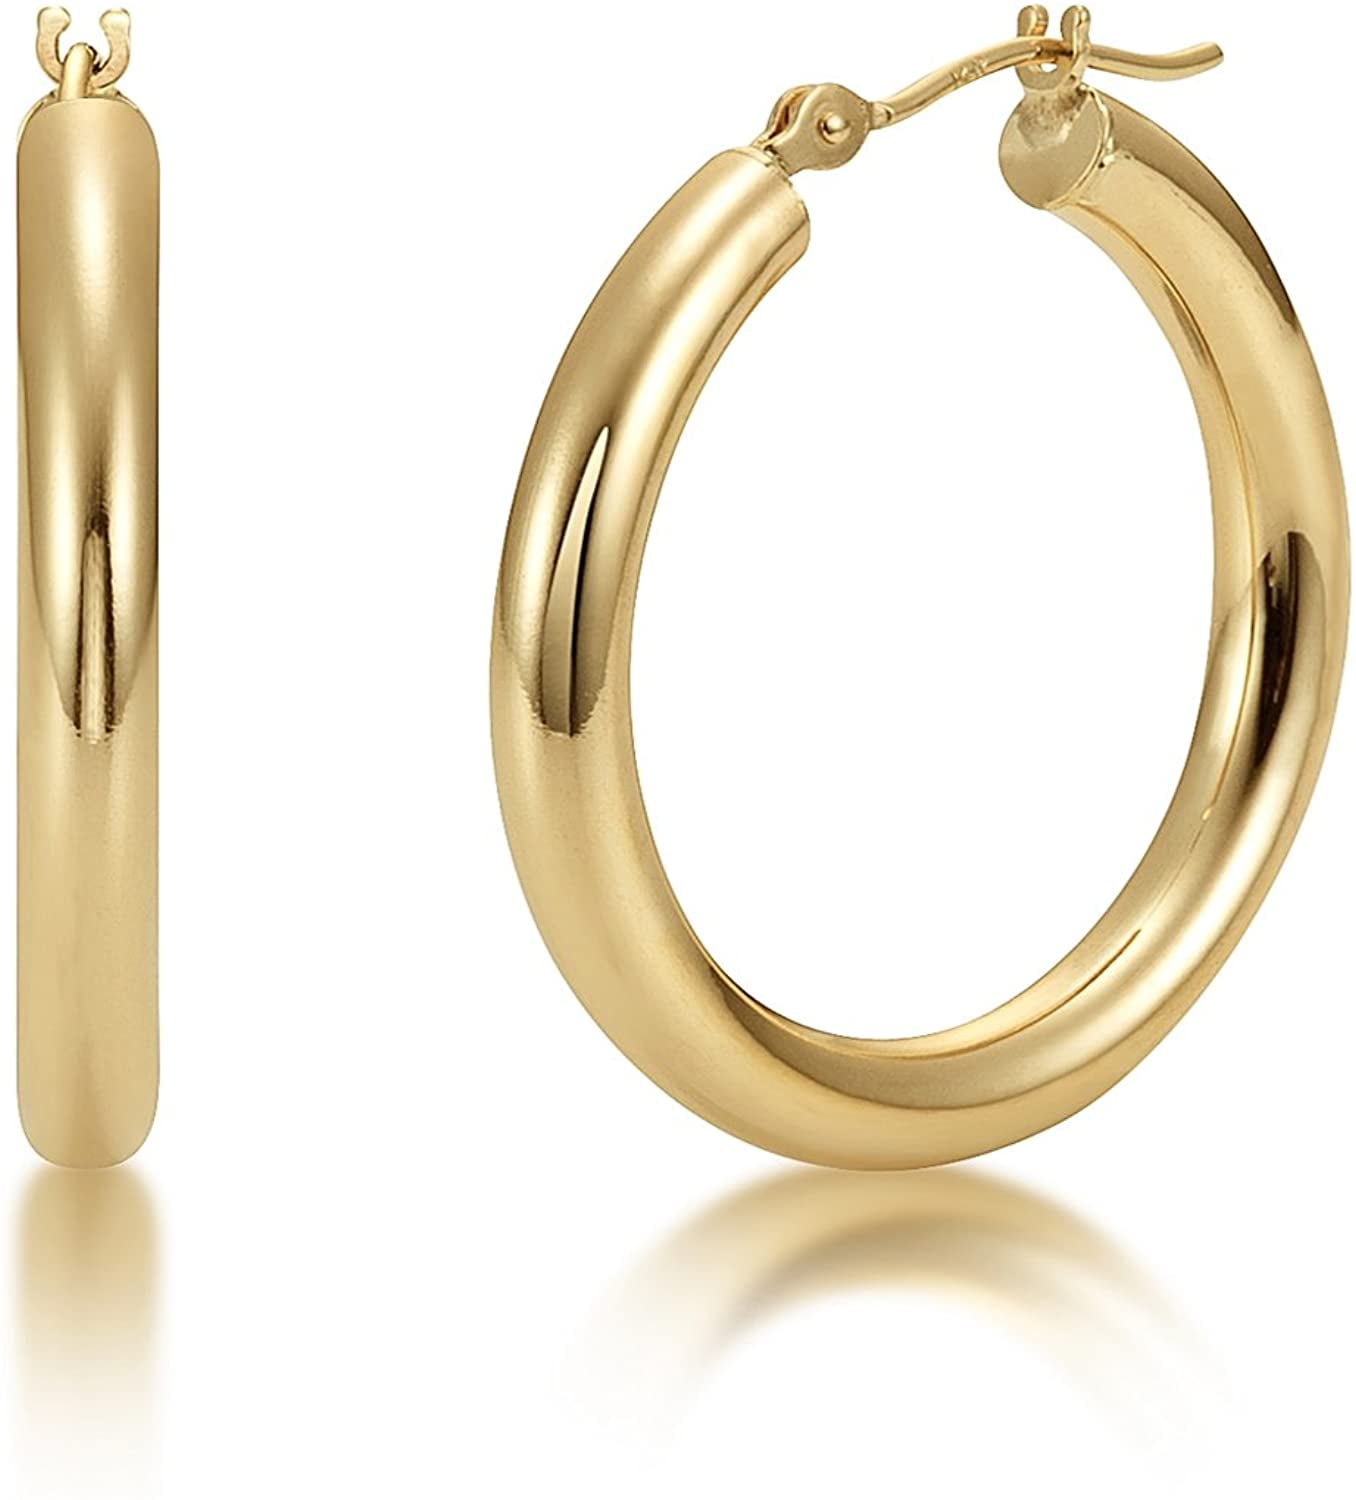 14 x 14 mm 14k Yellow Gold 3mm Thickness CZ Channel-set Hoop Huggies Earrings 